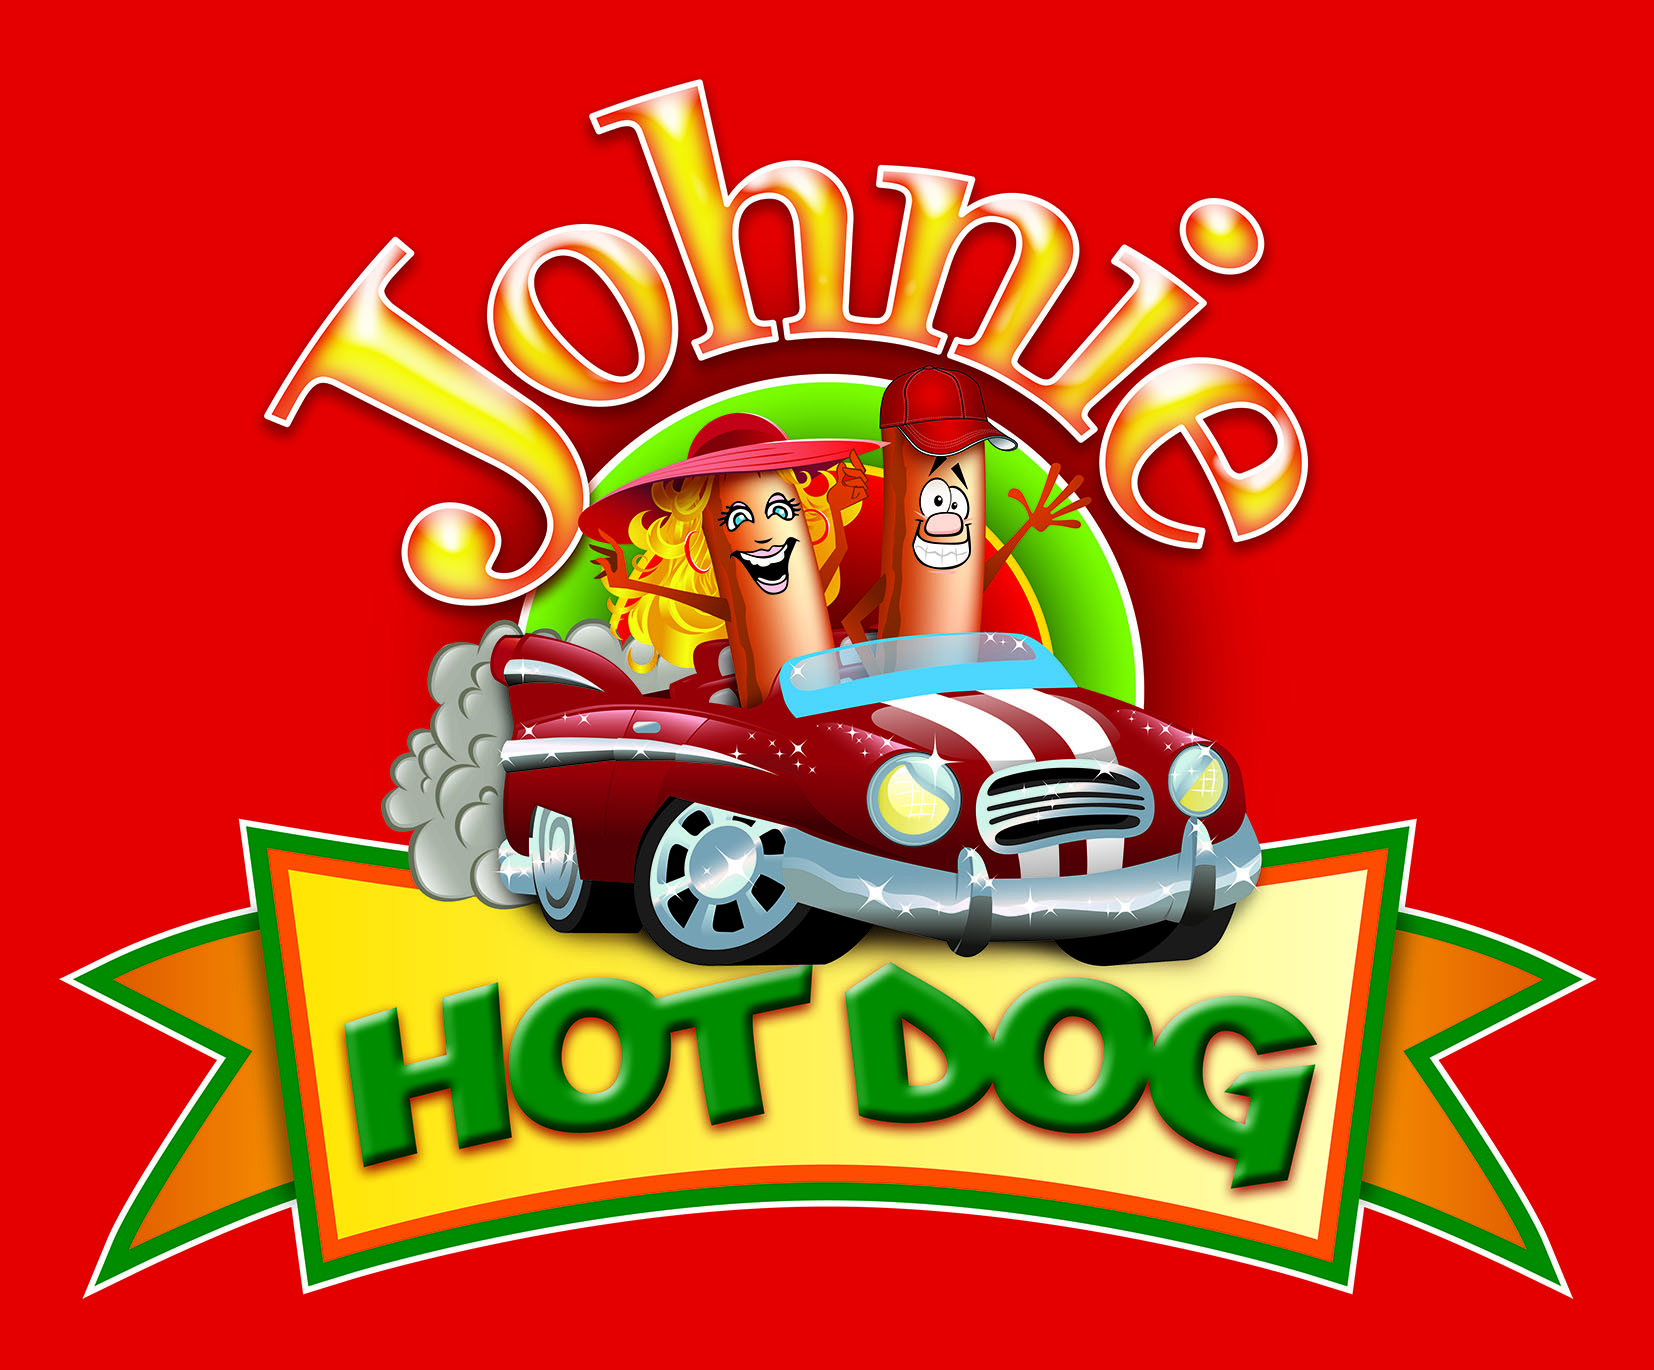 Johnie Hot Dog